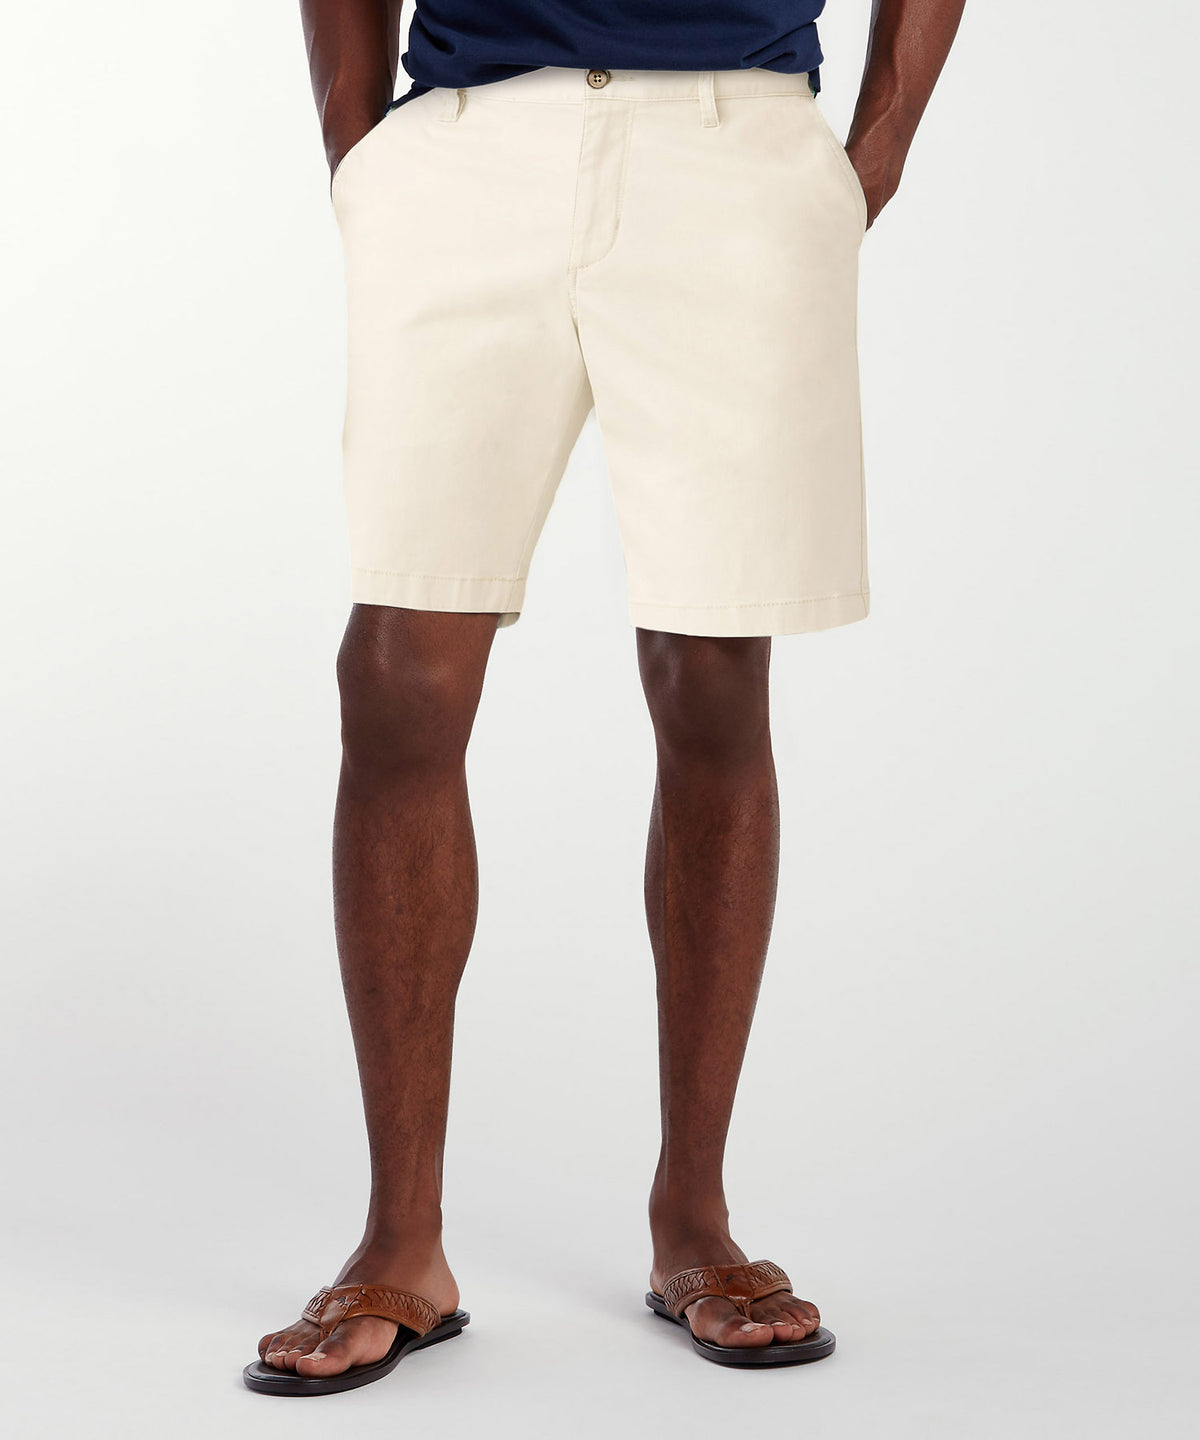 Tommy Bahama Stretch Chino Shorts, Men's Big & Tall